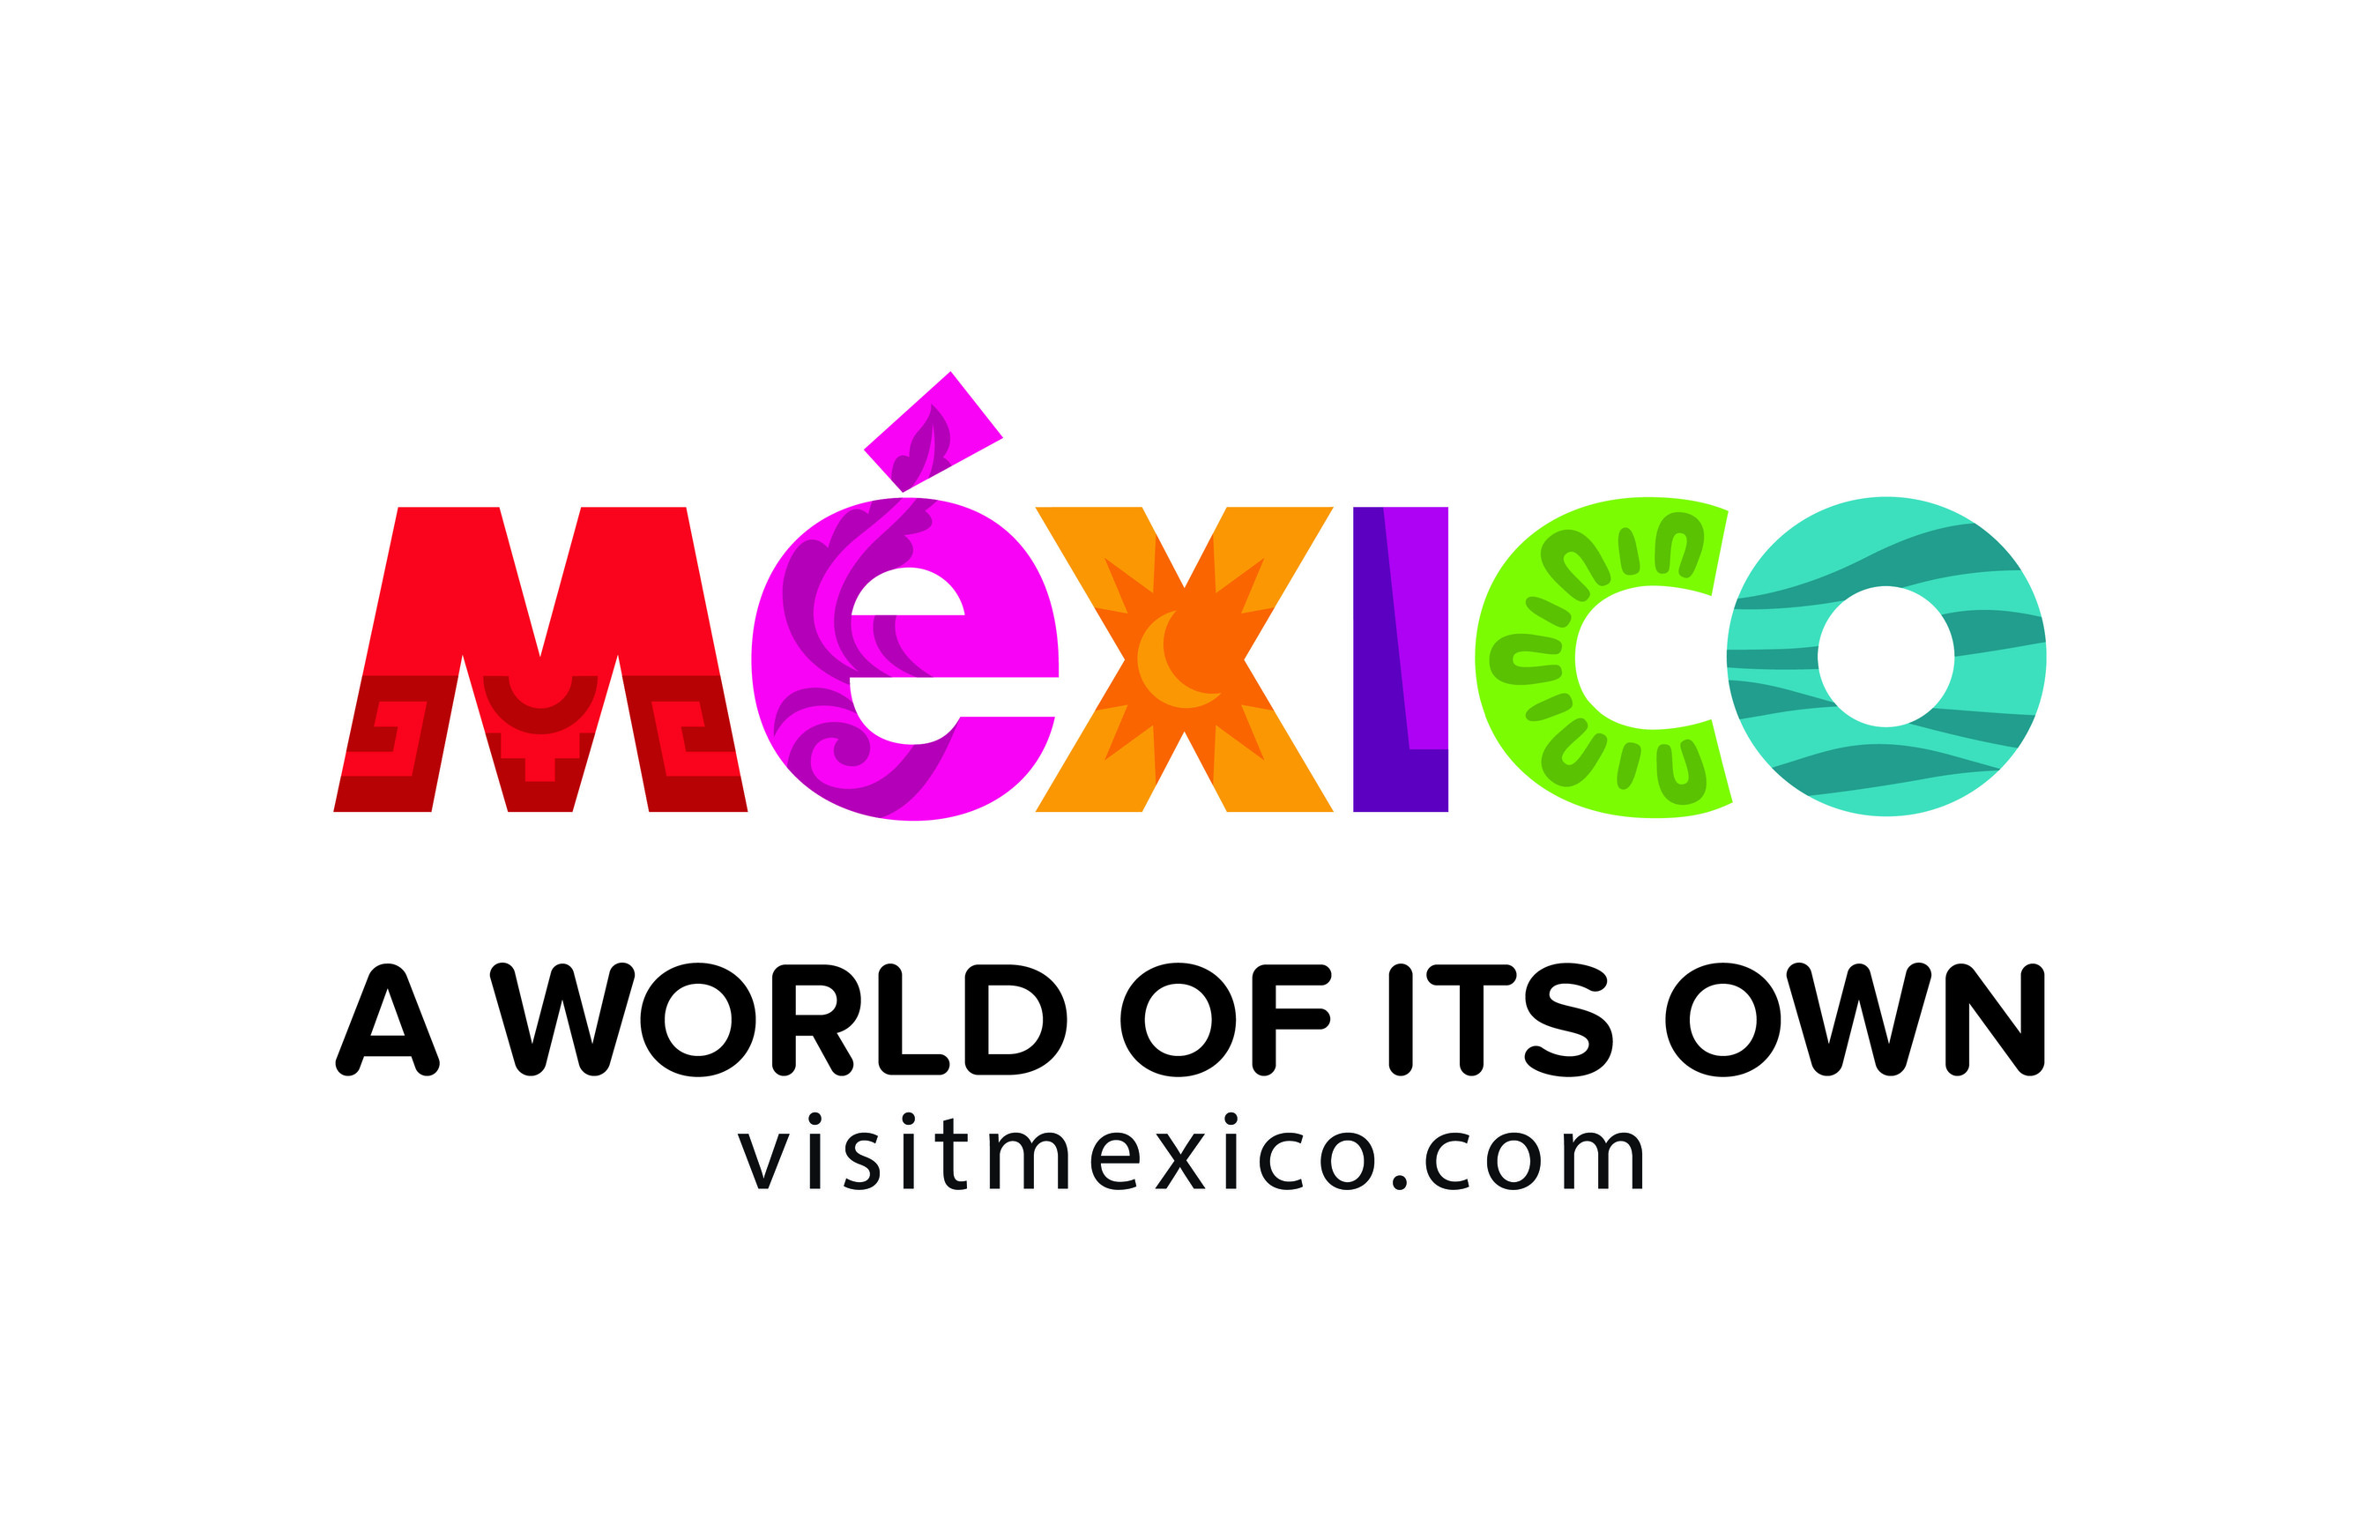 official tourism website of mexico